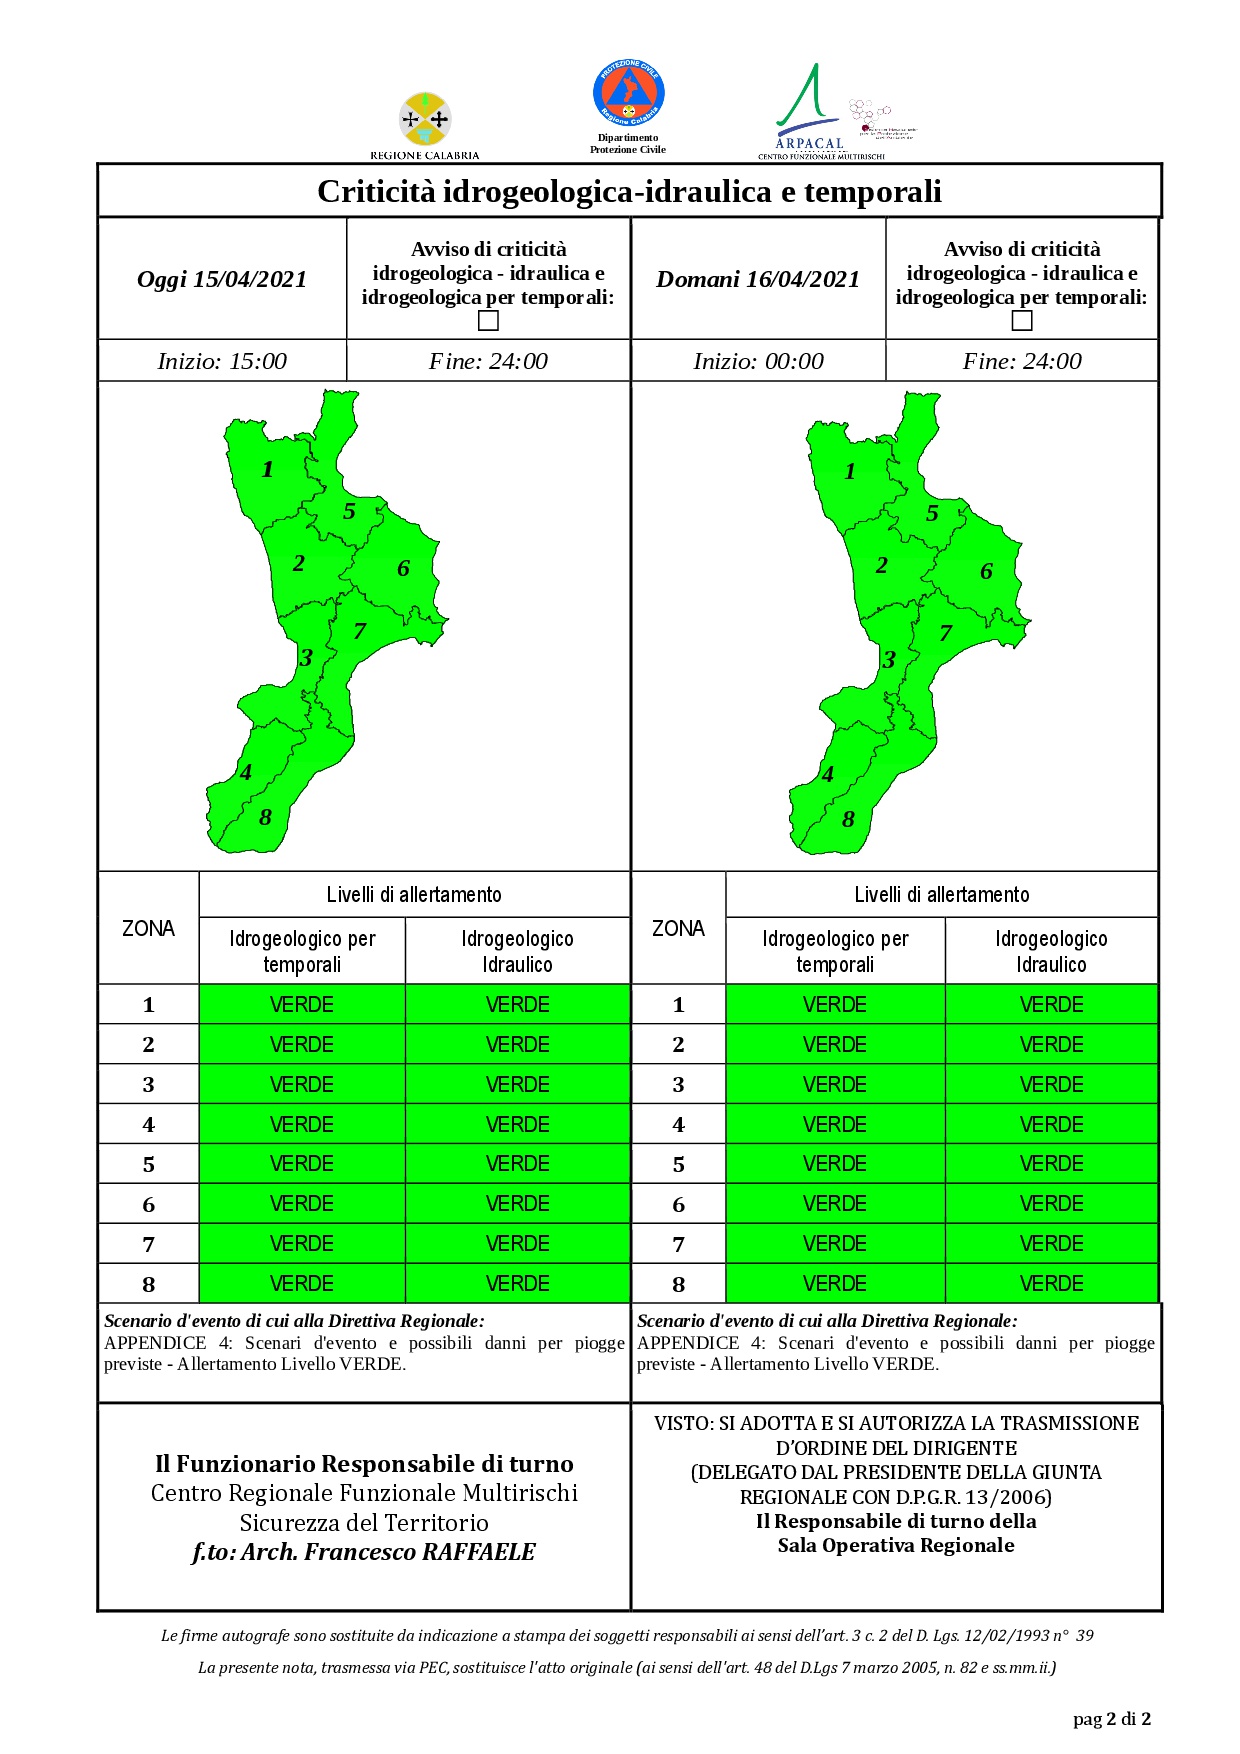 Criticità idrogeologica-idraulica e temporali in Calabria 15-04-2021